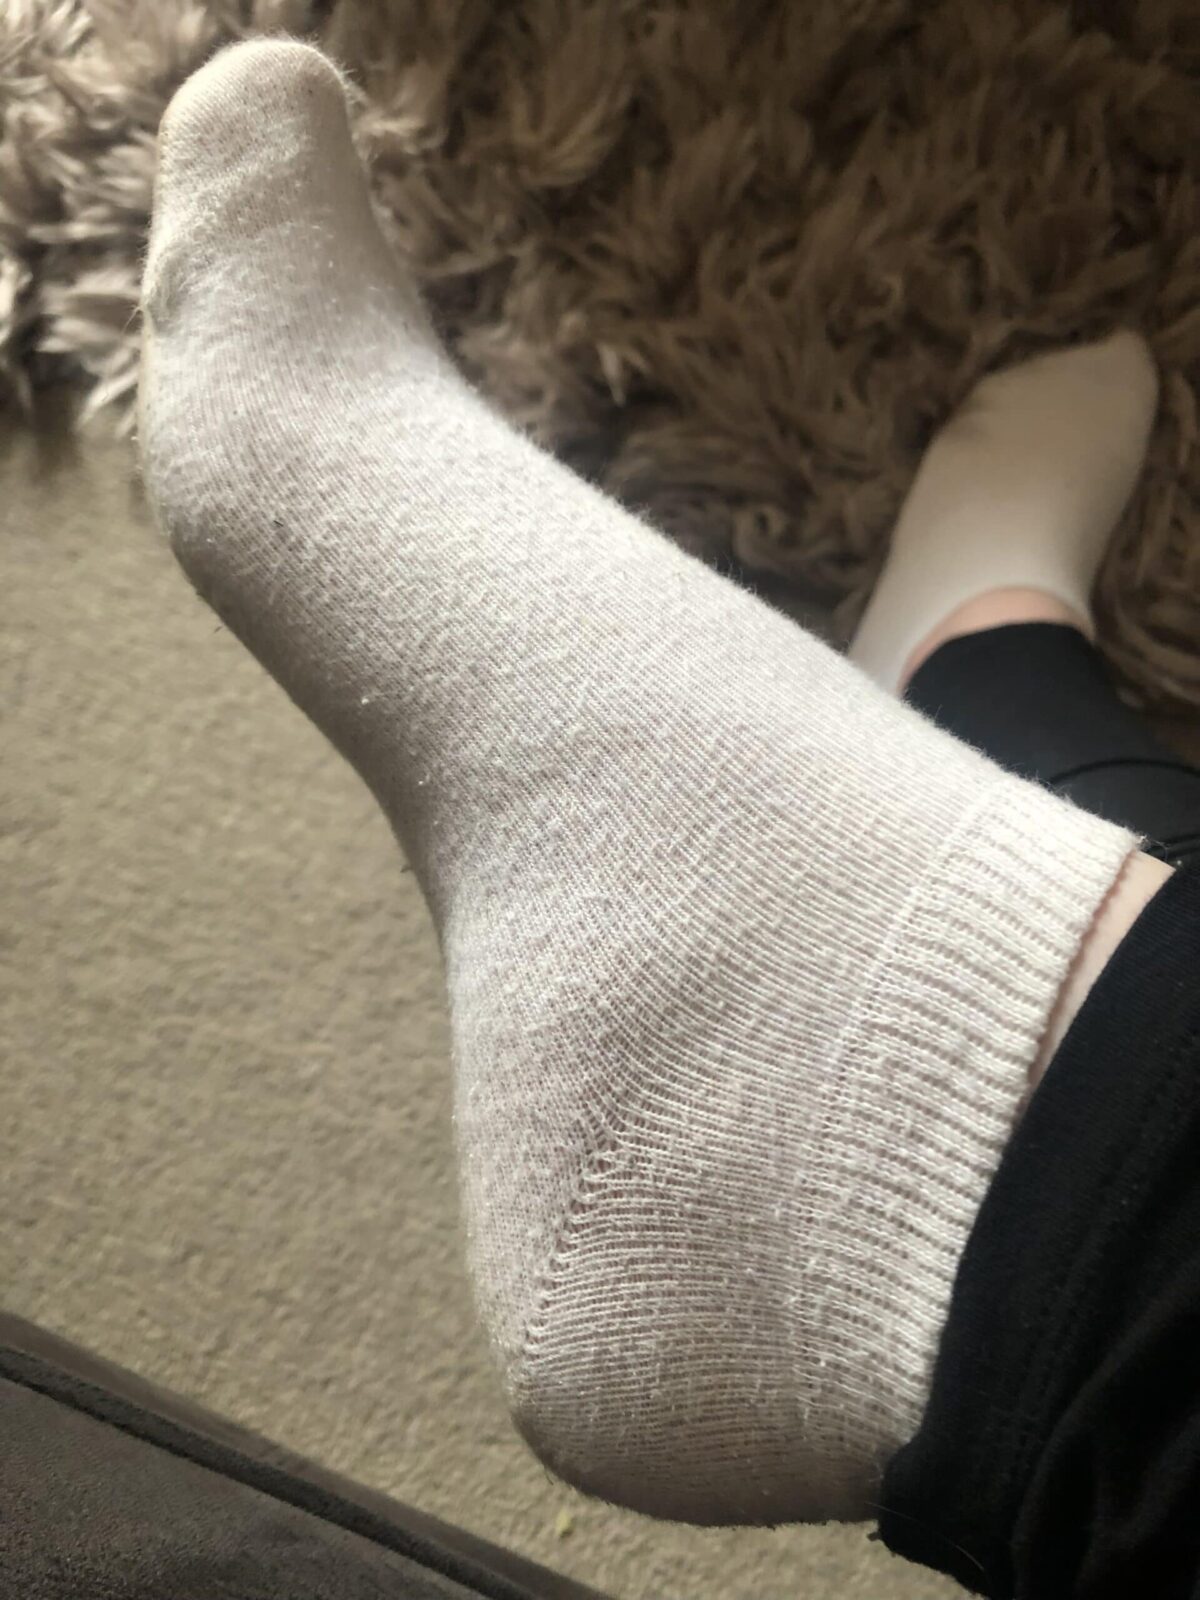 Women’s used white trainer socks - Knickery